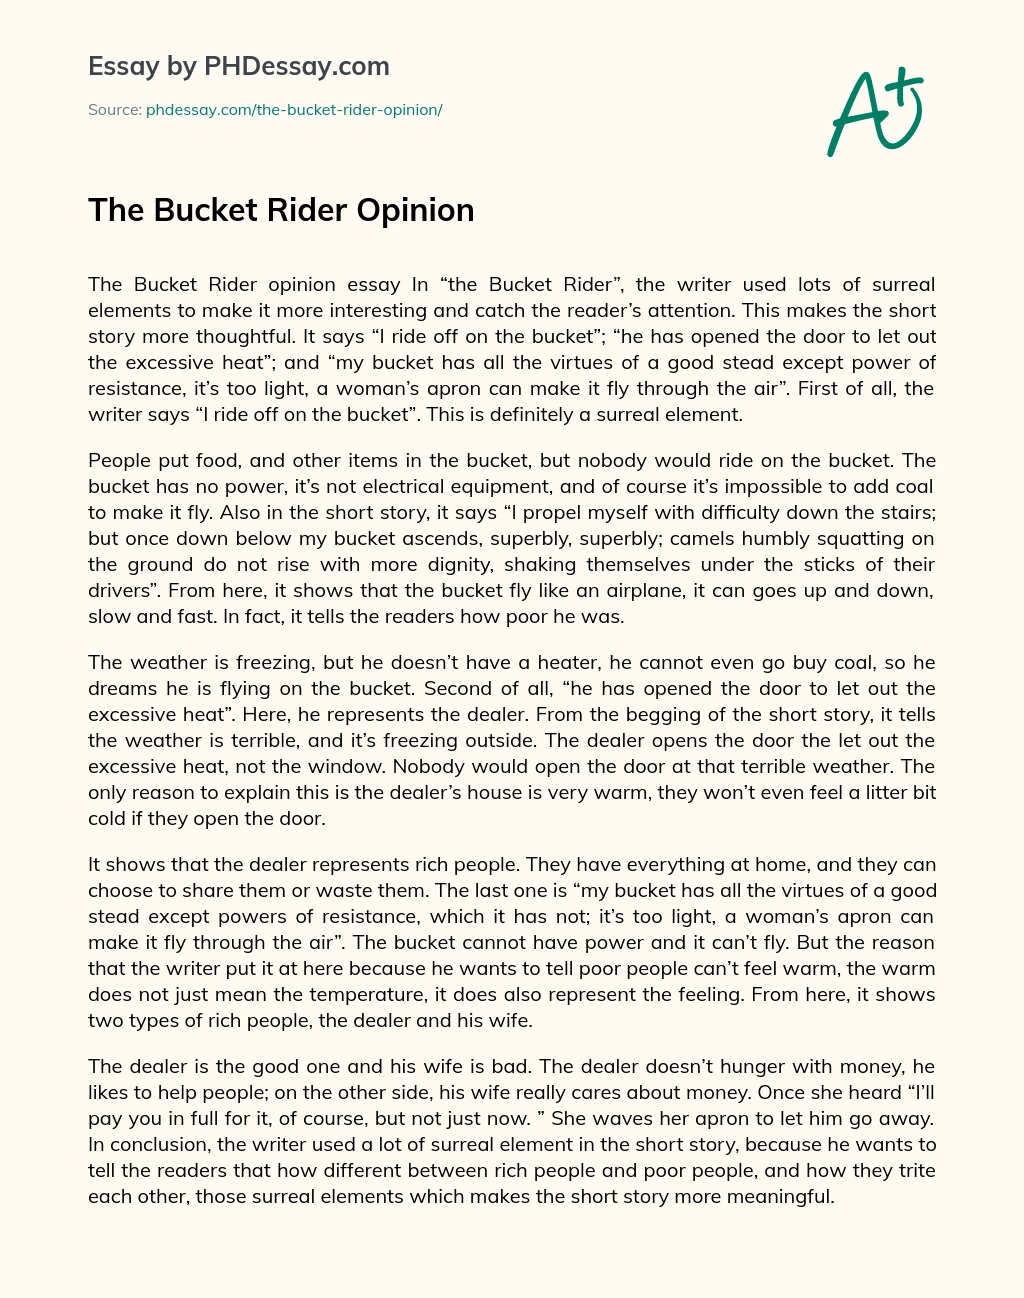 The Bucket Rider Opinion essay